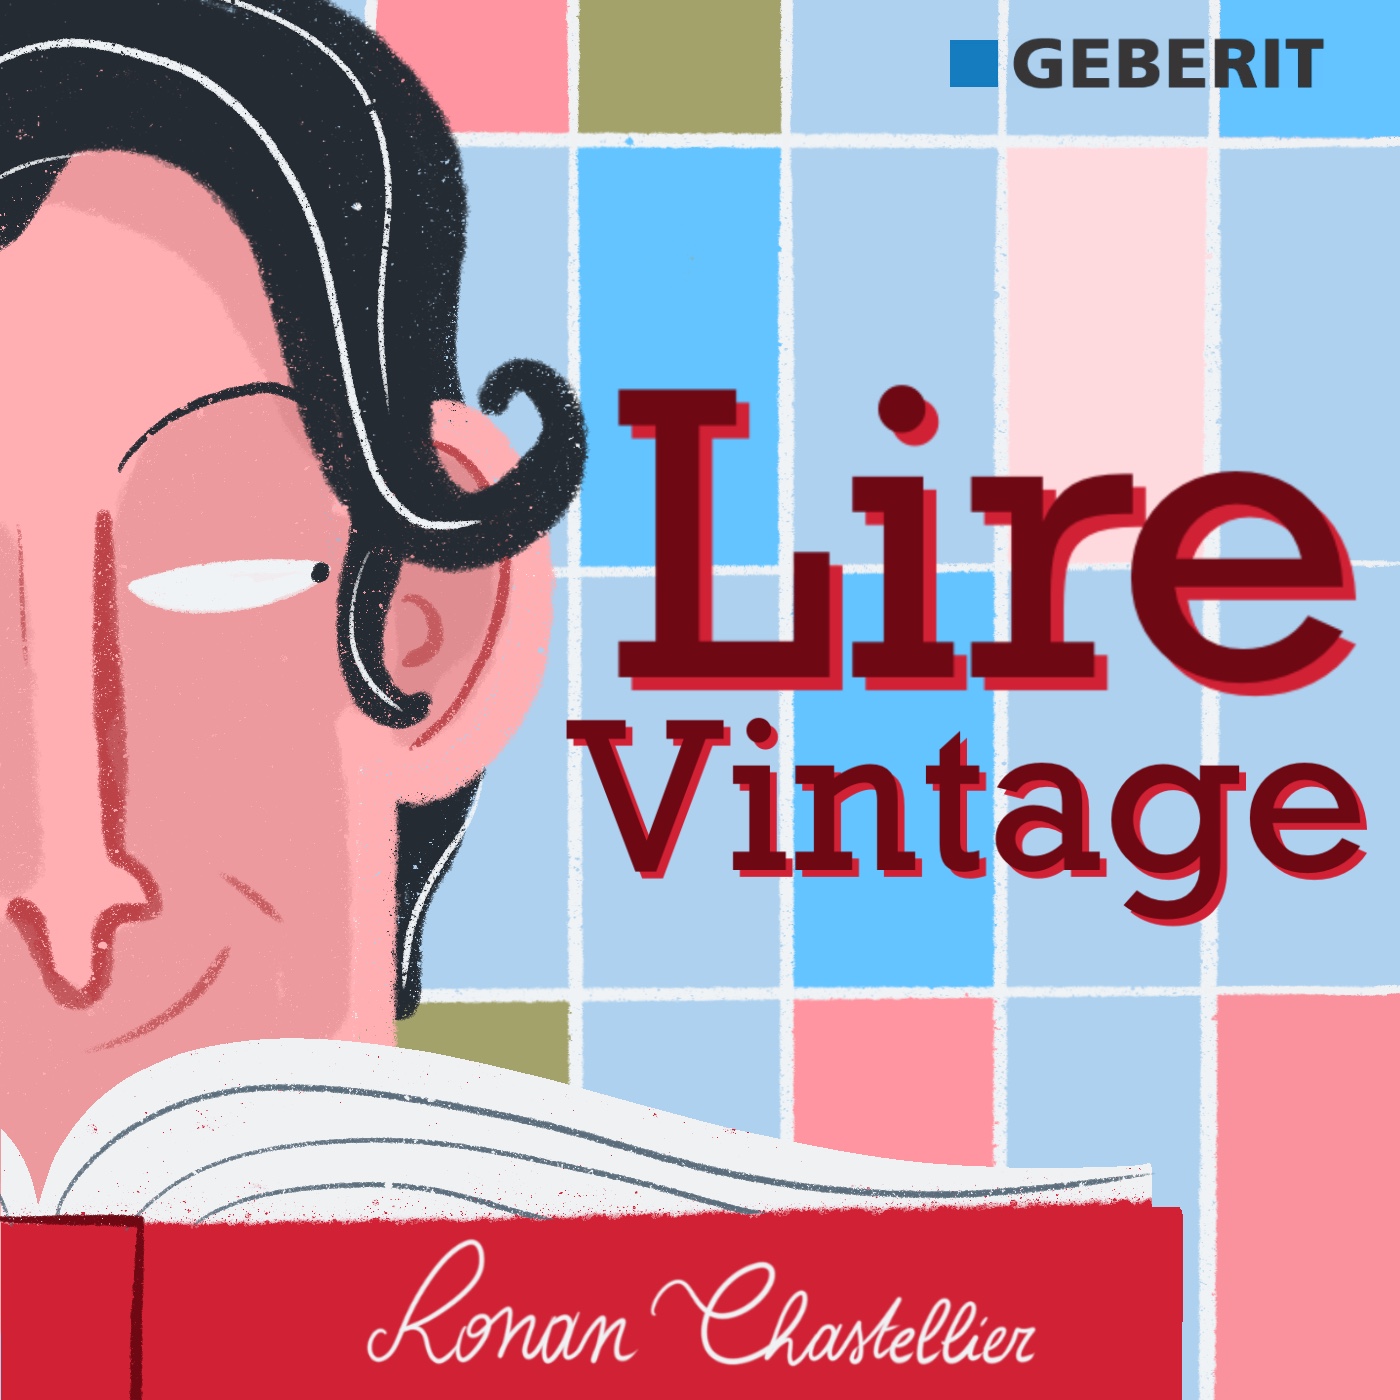 Geberit - Lire Vintage